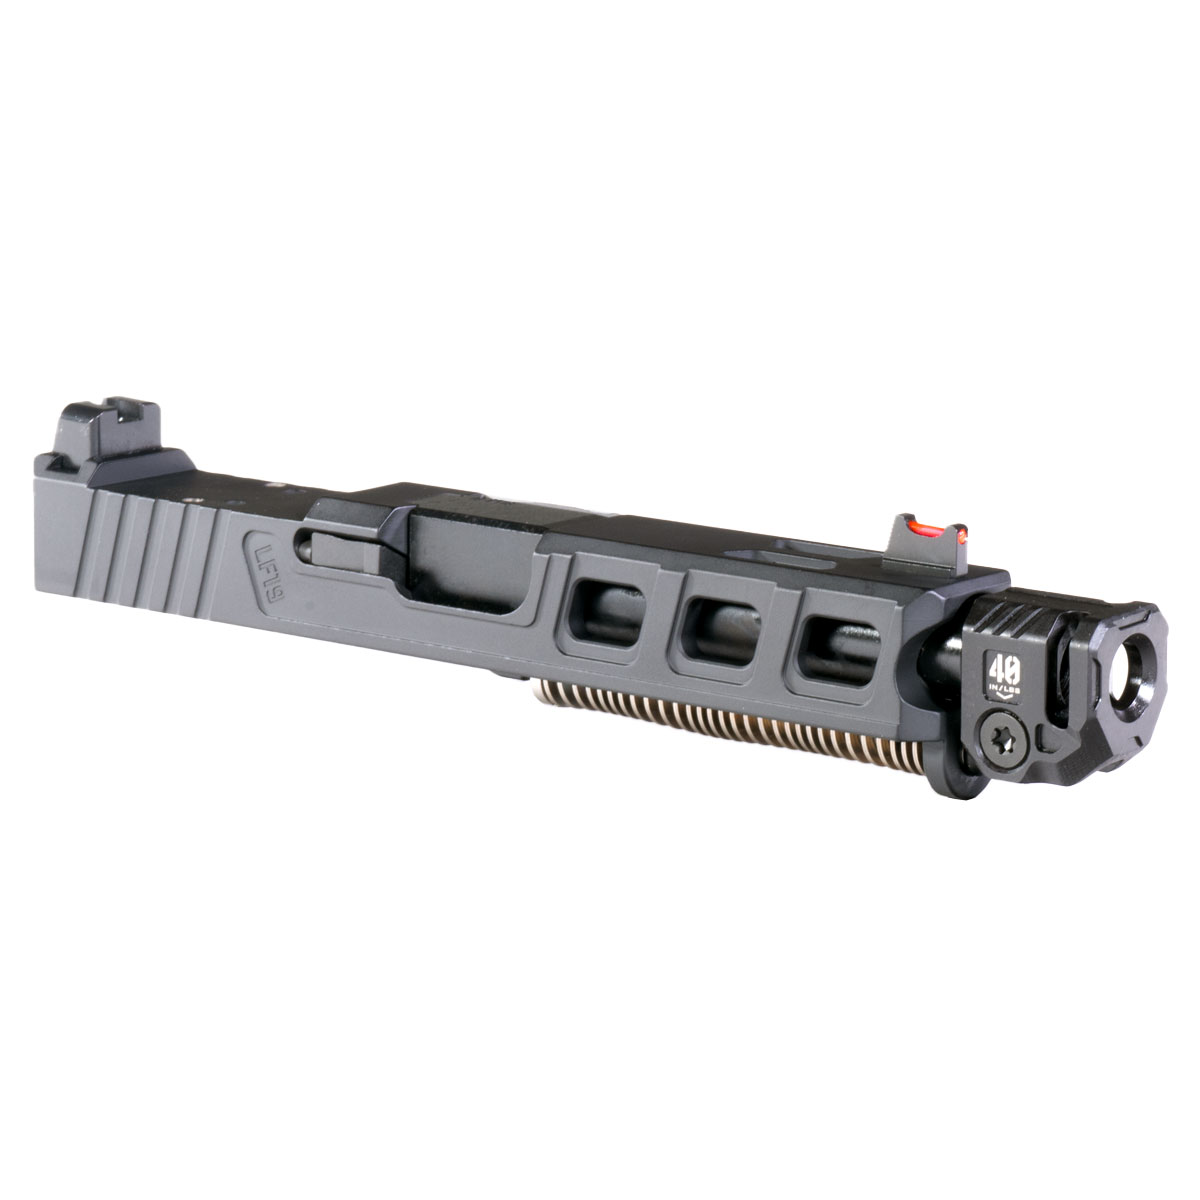 DTT 'Fana' 9mm Complete Slide Kit - Glock 19 Gen 1-3 Compatible
